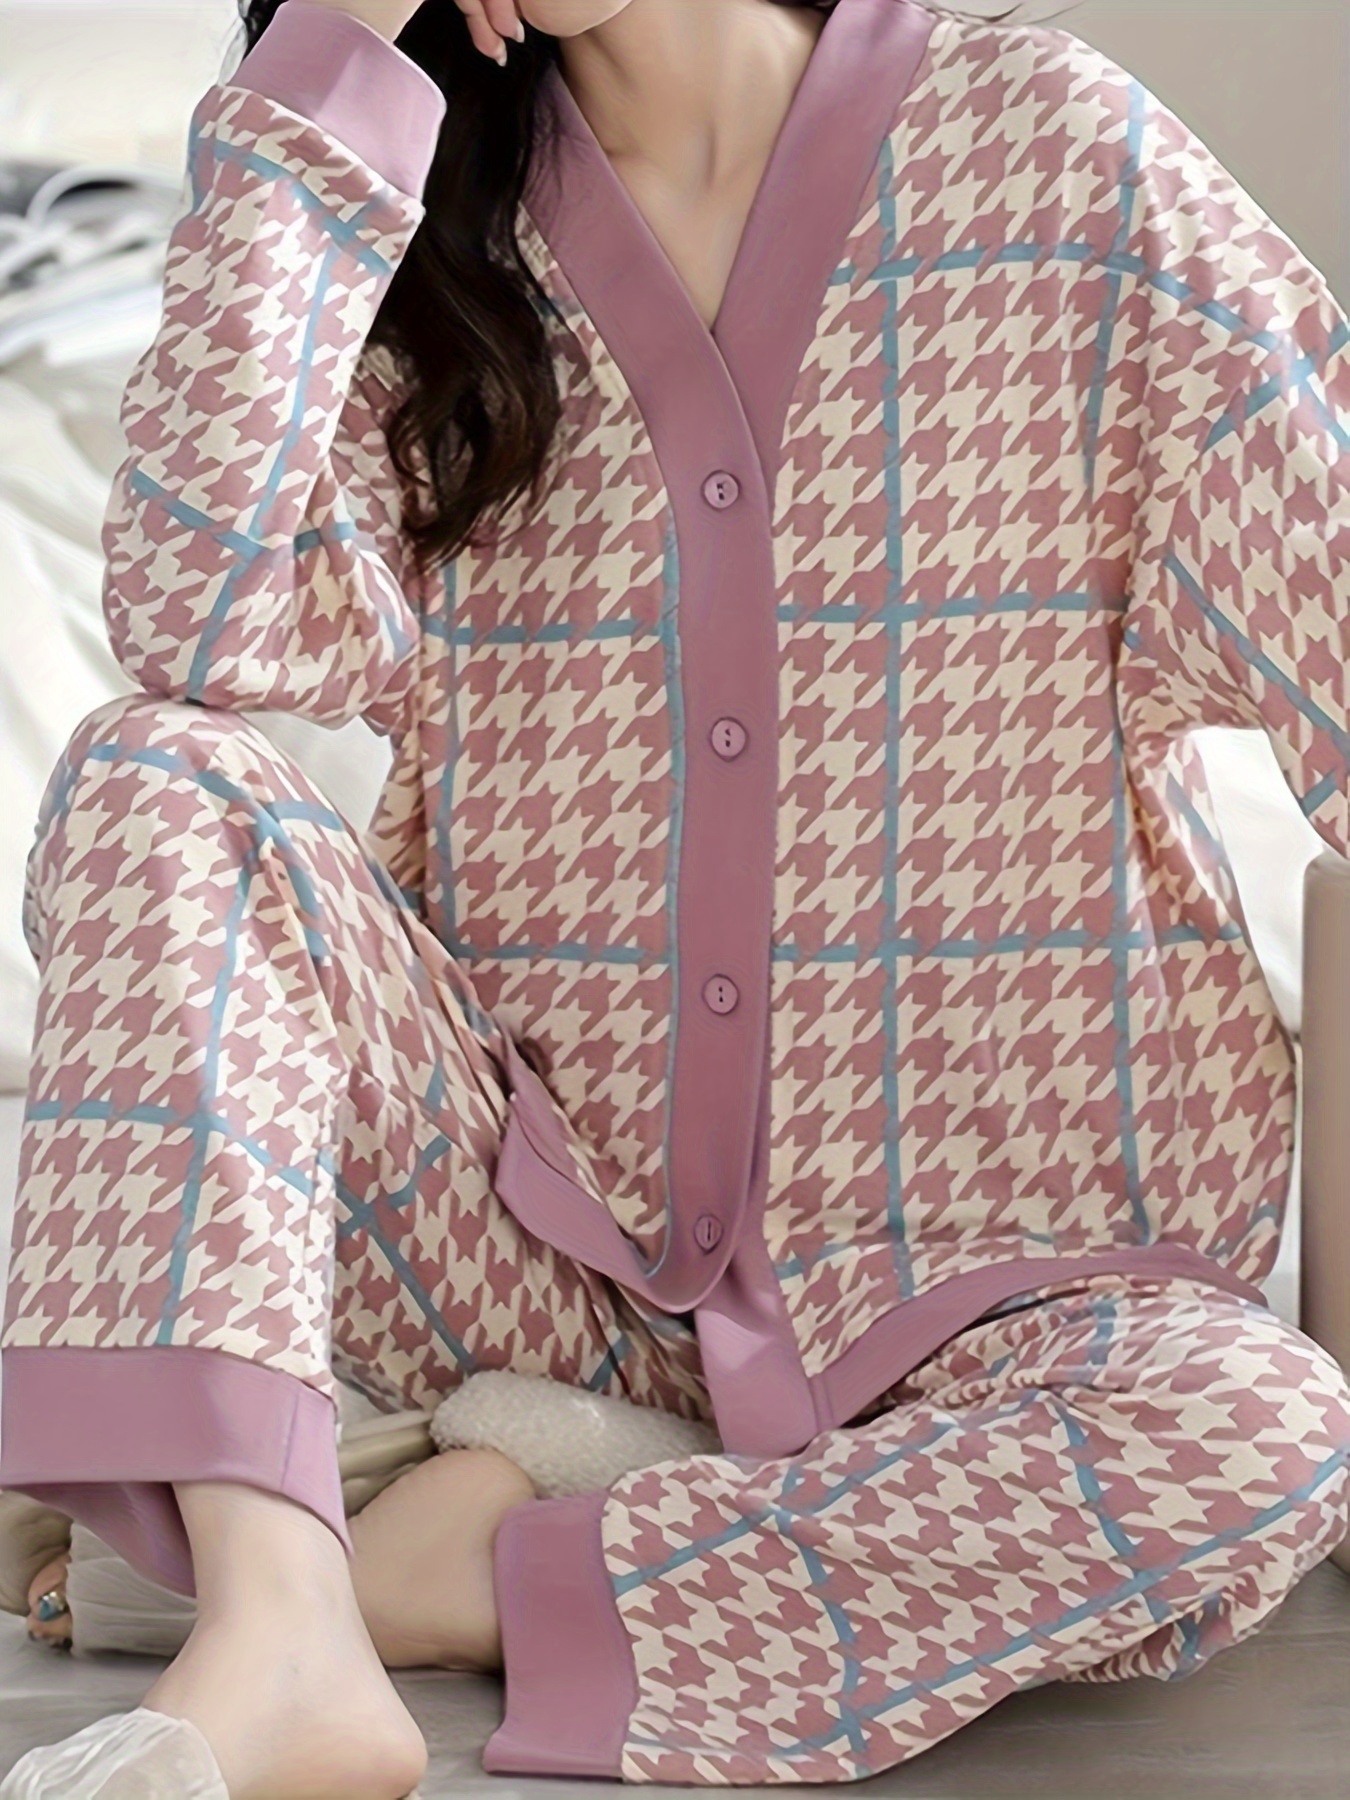 Pantalón tipo pijama con estampado de cadenas - OBSOLETES DO NOT TOUCH  1AB79P